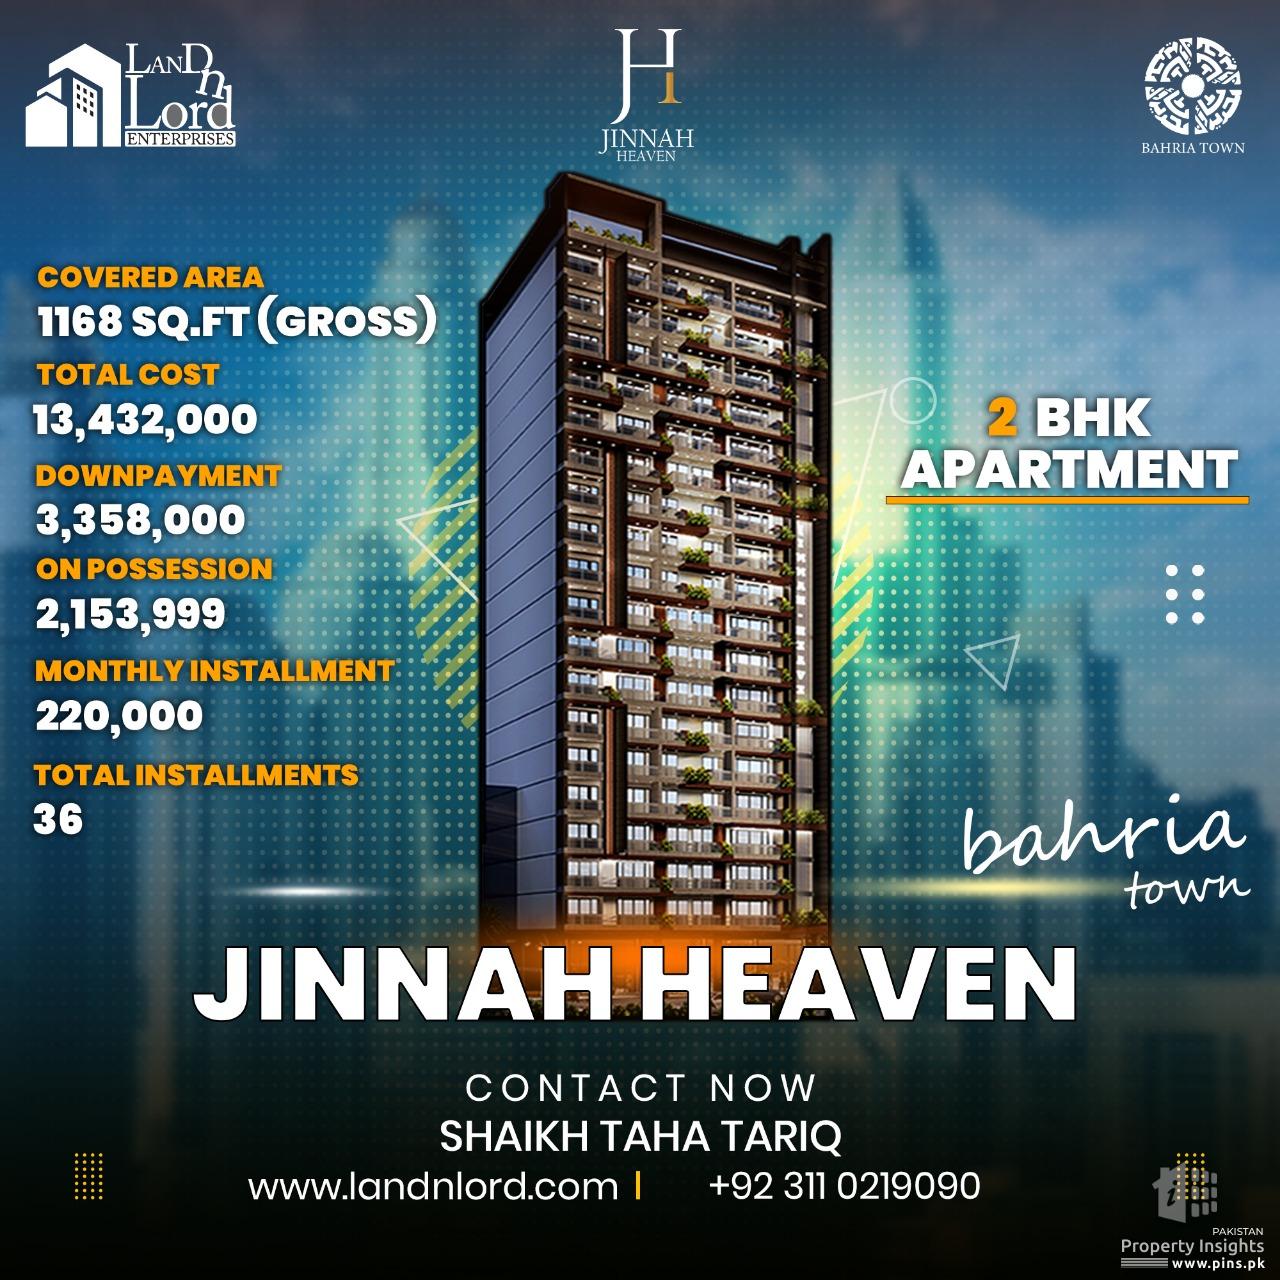 JINNAH HEAVEN 2BHK 1168 SQFT APARTMENT 3-YEAR INSTALLMENT PAYMENT SCHEDULE